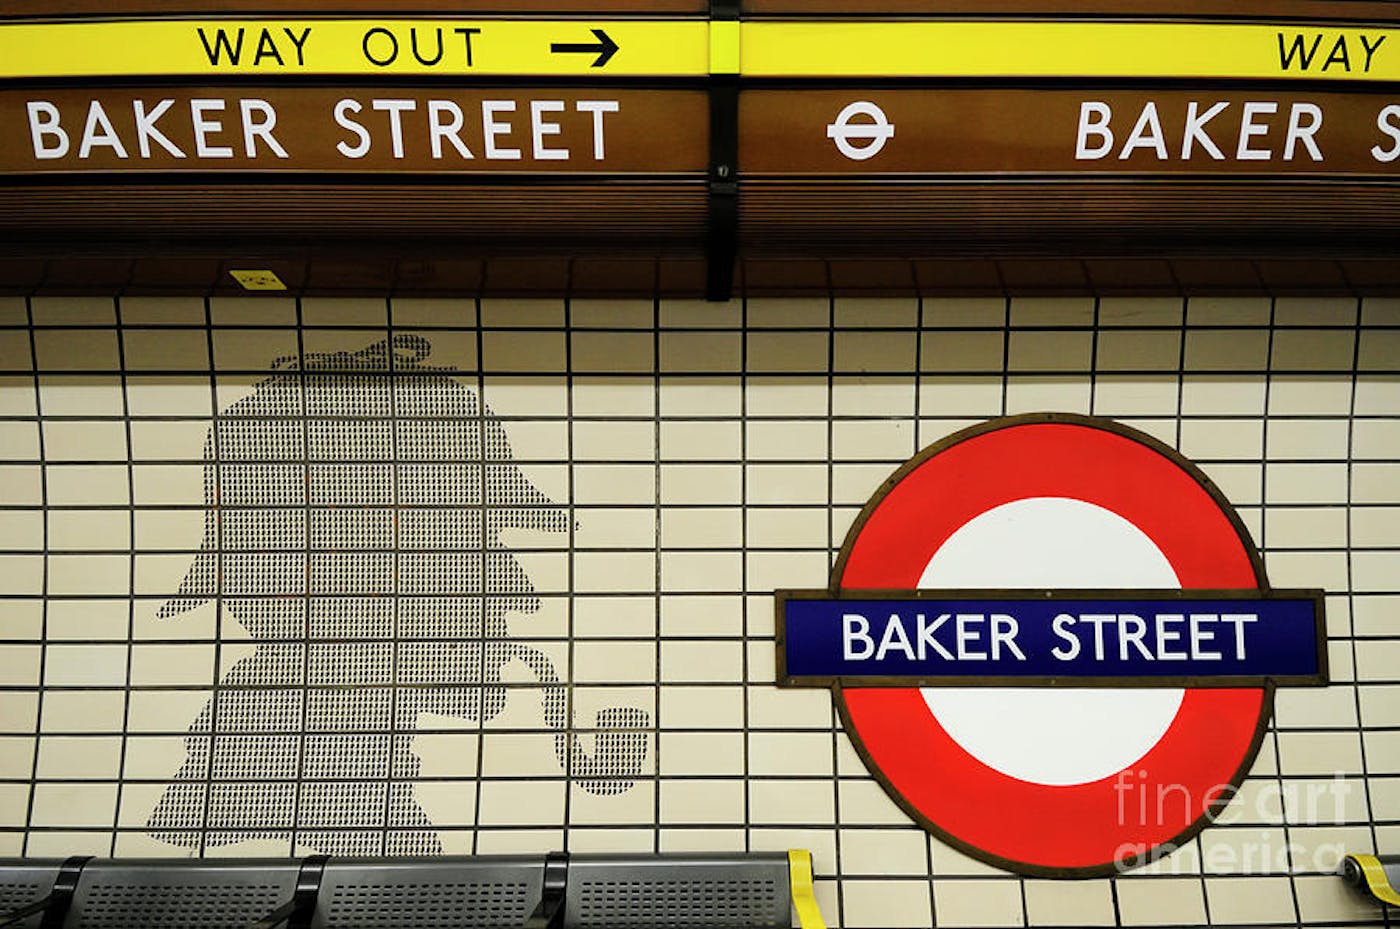 Sherlock holmes tiles at baker street tube station alistair laming